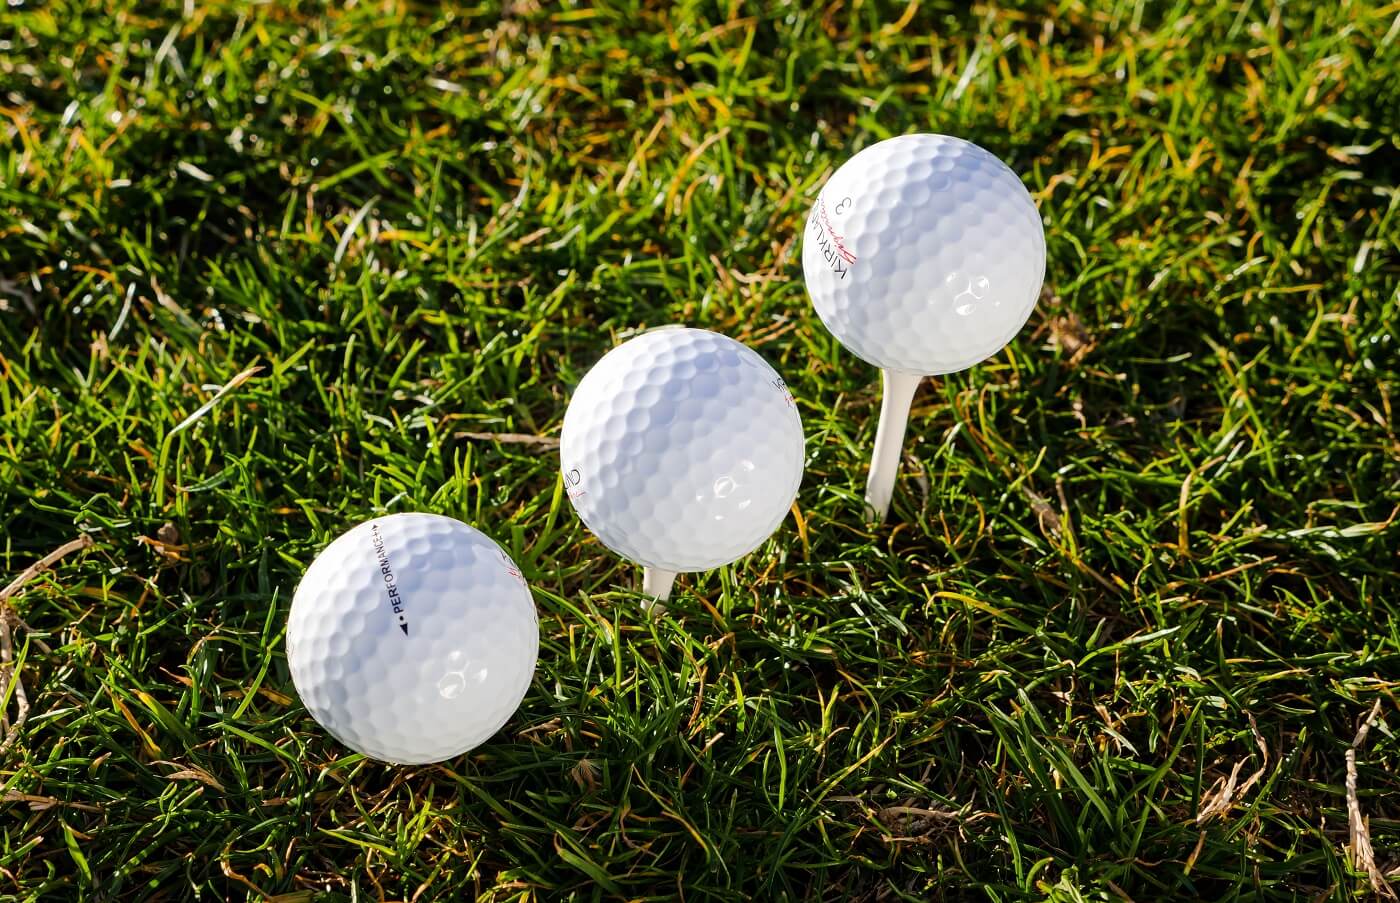 best golf balls for slow swing speeds: three golf balls on tee